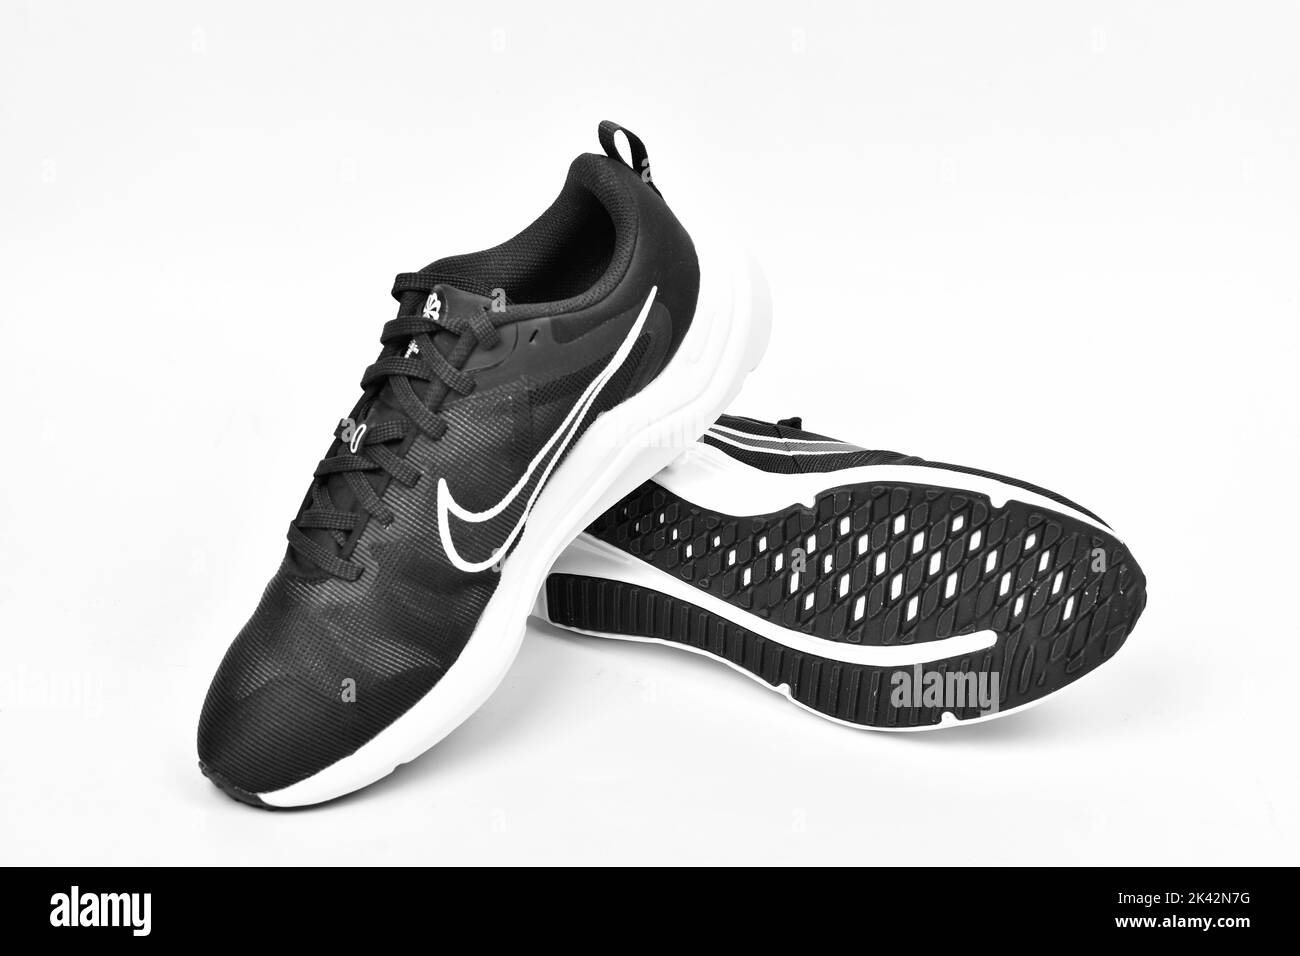 New Delhi, India - 29 September 2022 : Pair of Nike Running Shoes Isolated on White Background Stock Photo